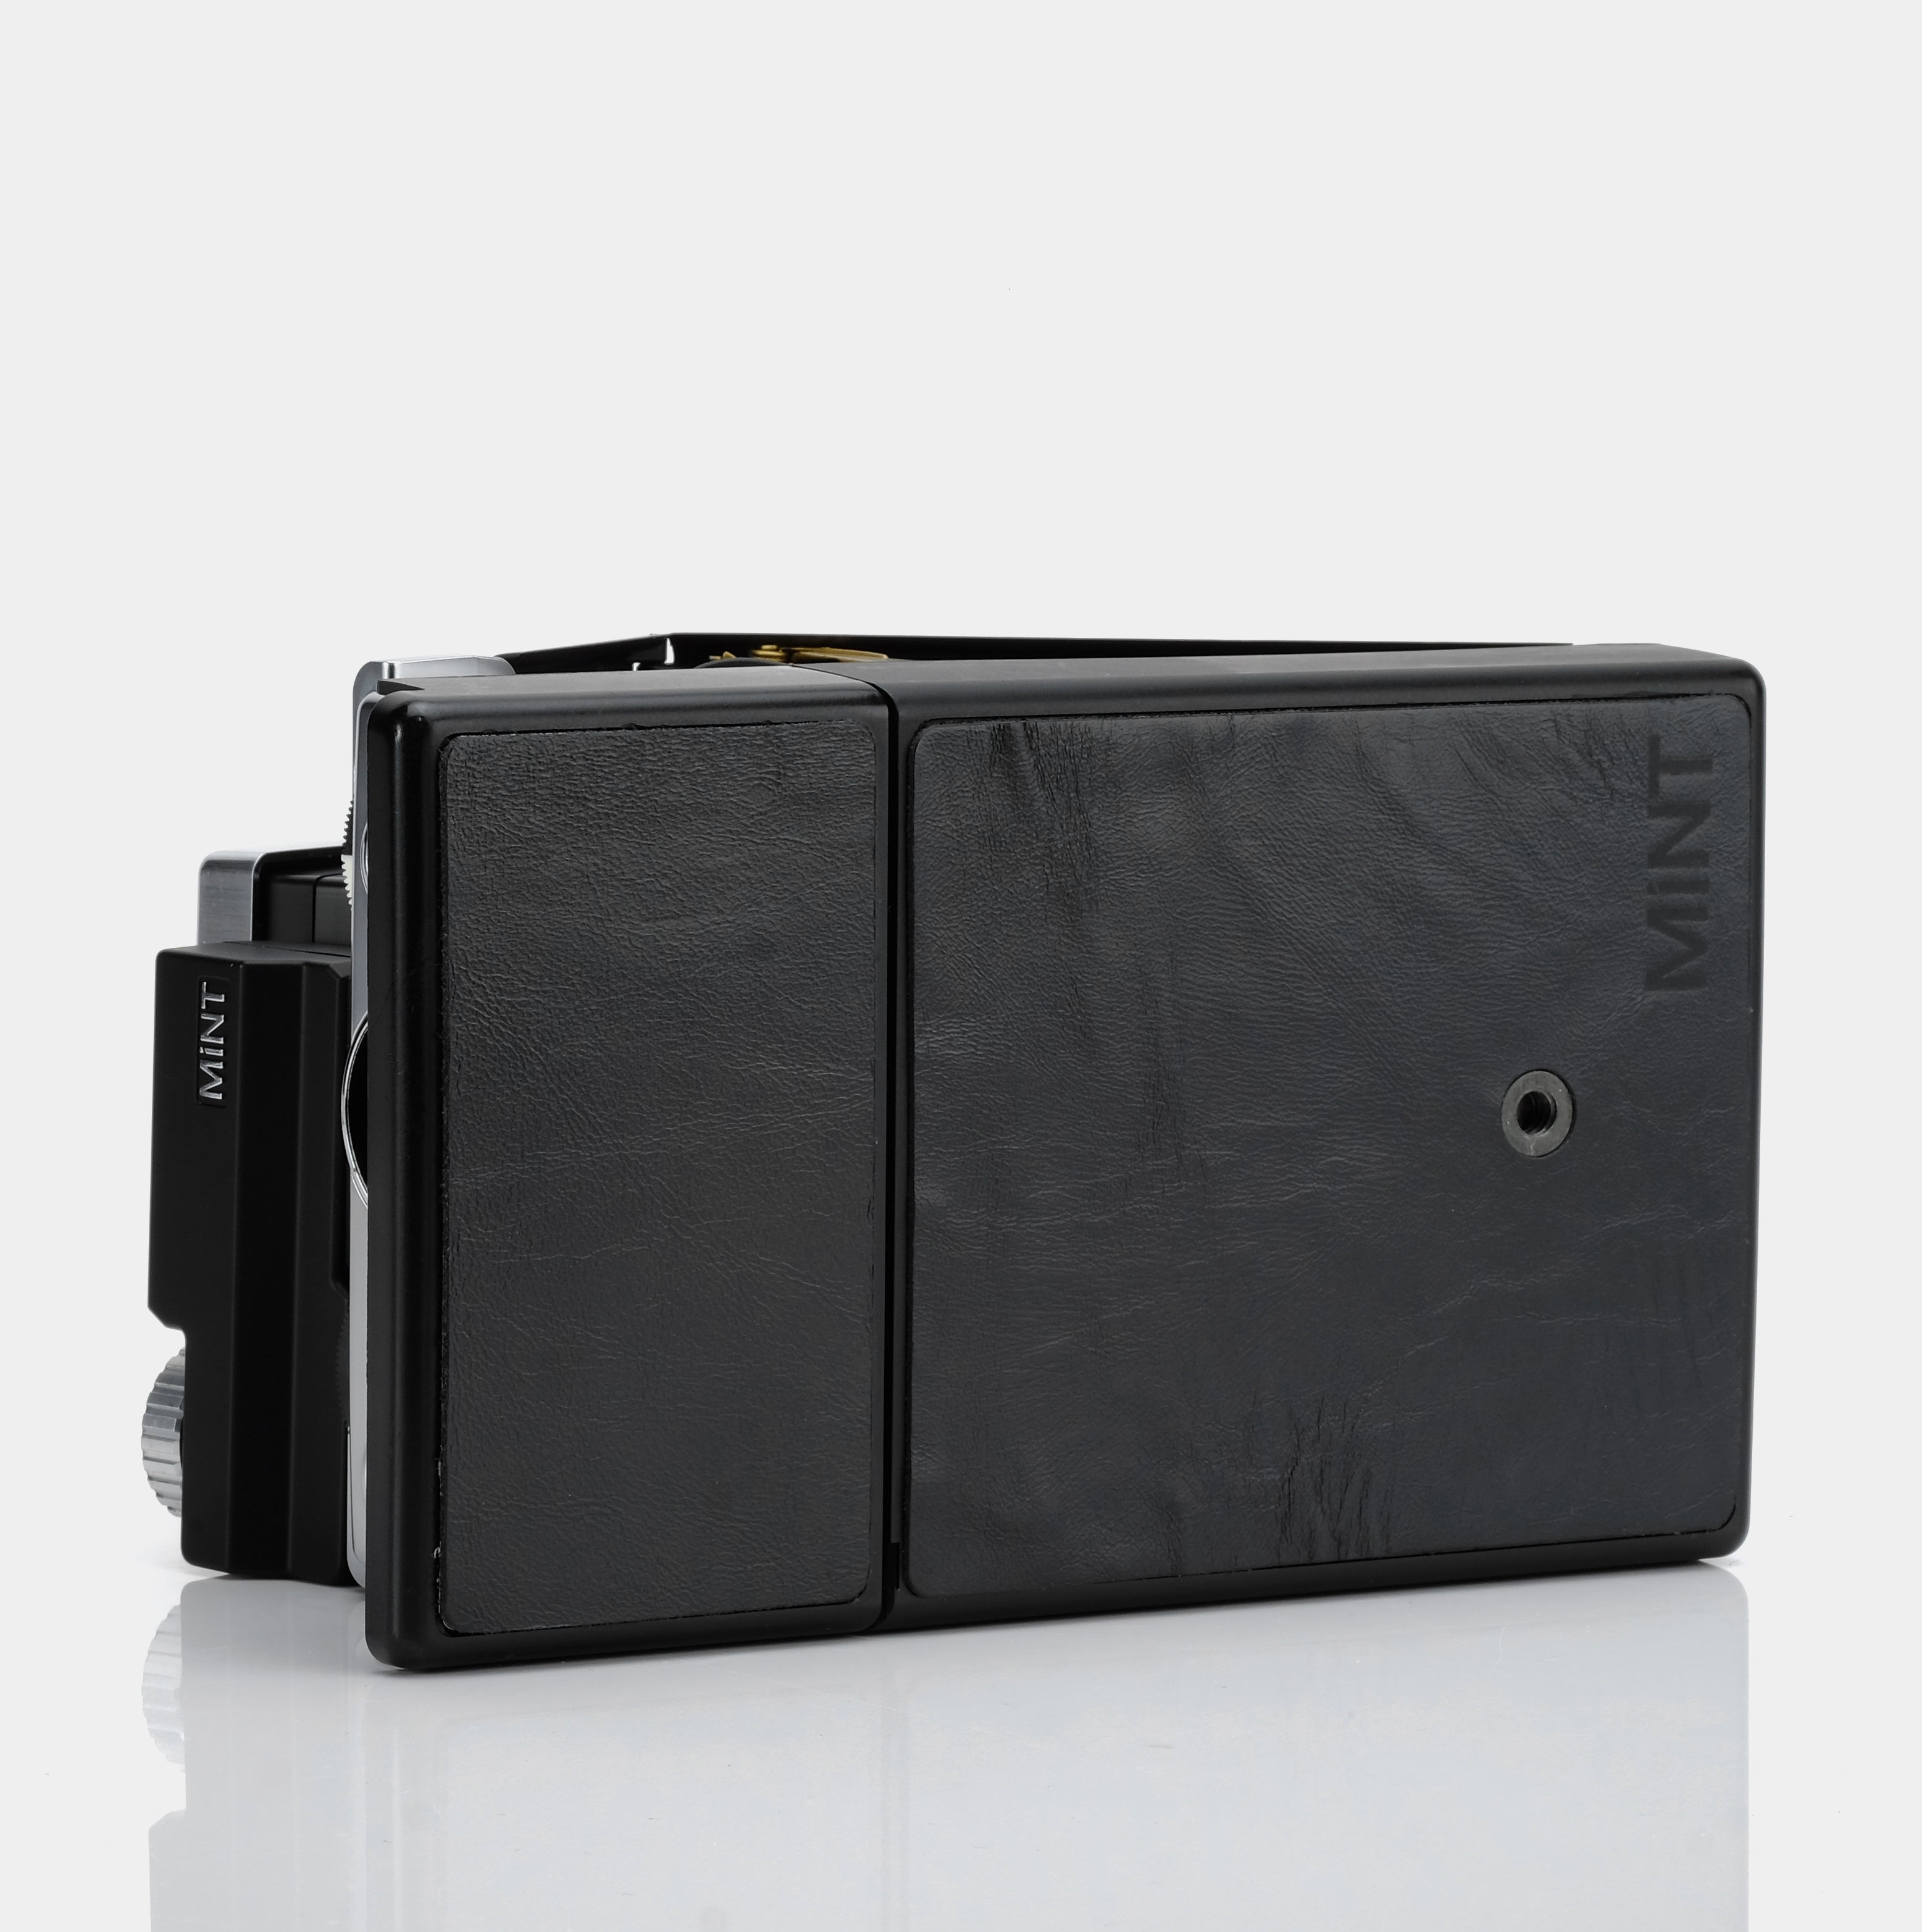 Polaroid SX-70 MiNT SLR 670-S Folding Instant Film Camera